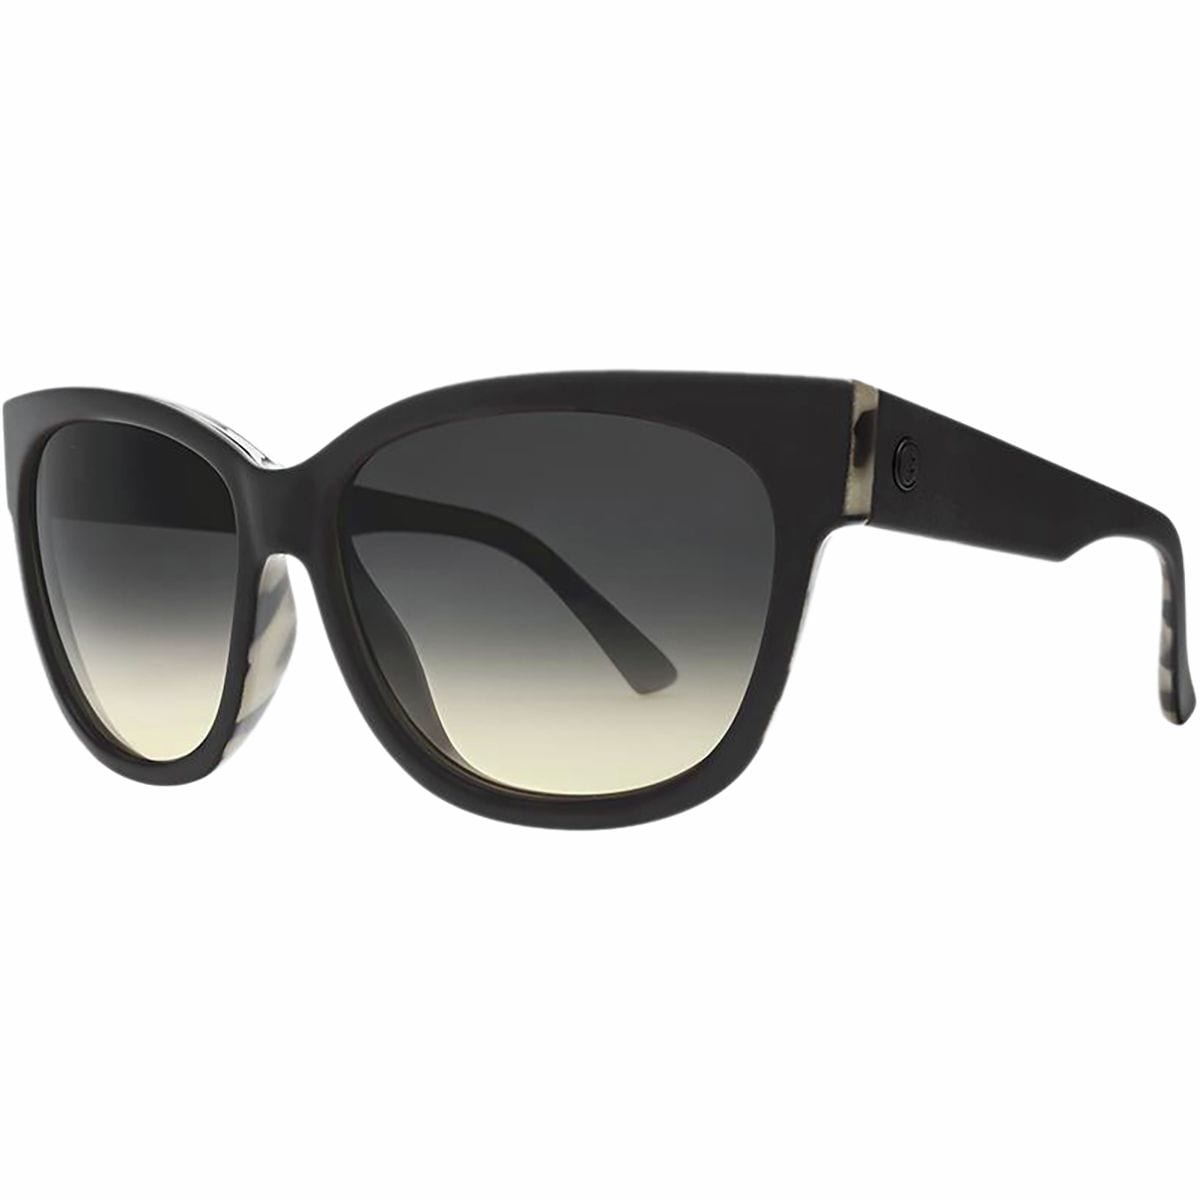 Electric Danger Cat Sunglasses - Women's Black Tort/Ohm Black Gradient One Size